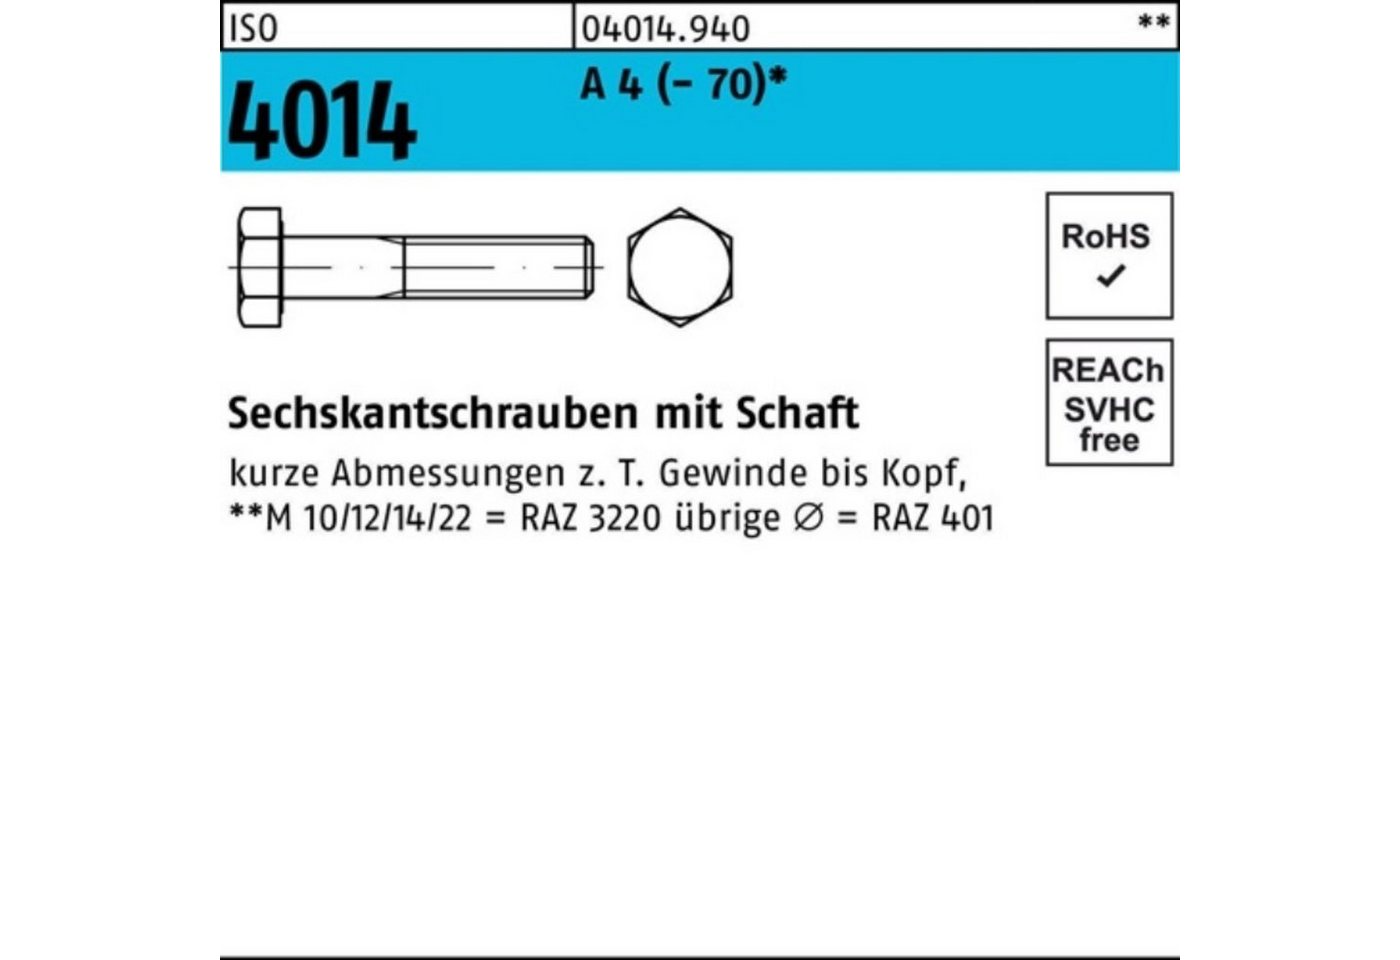 Bufab Sechskantschraube 100er Pack Sechskantschraube ISO 4014 Schaft M20x 85 A 4 (70) 1 Stü von Bufab